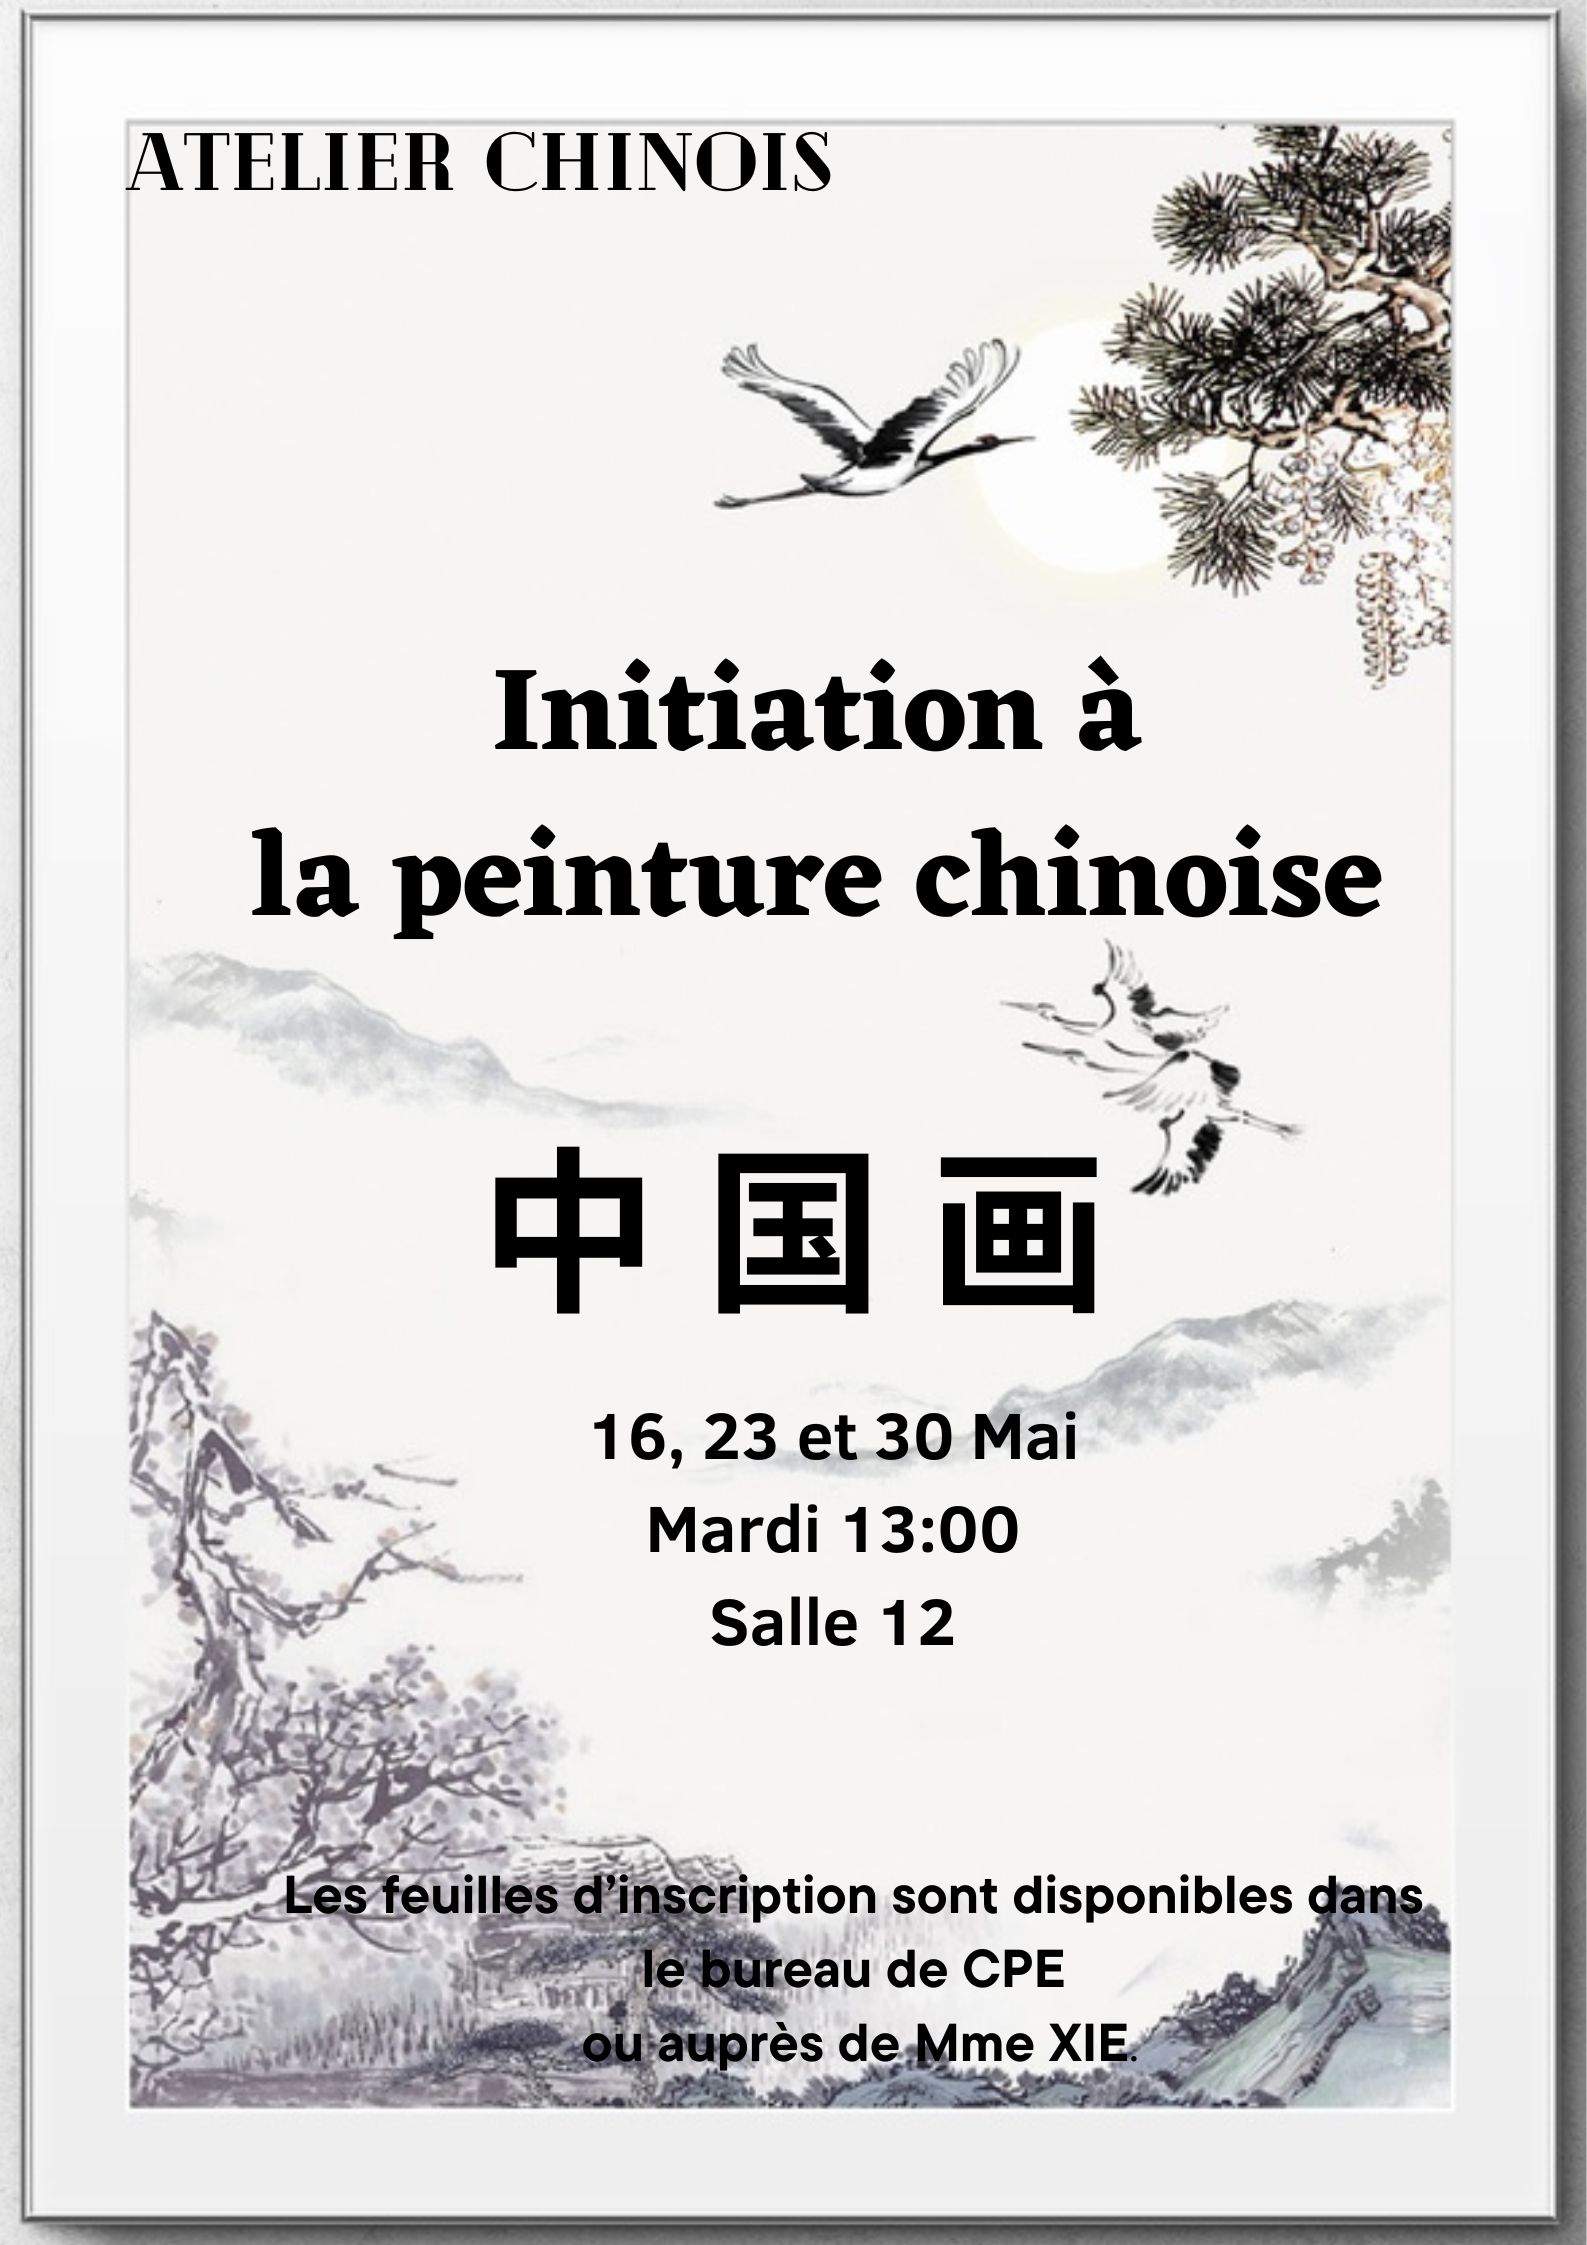 ATELIER CHINOIS le mardi 16, 23 et 30 Mai (peinture chinoise )